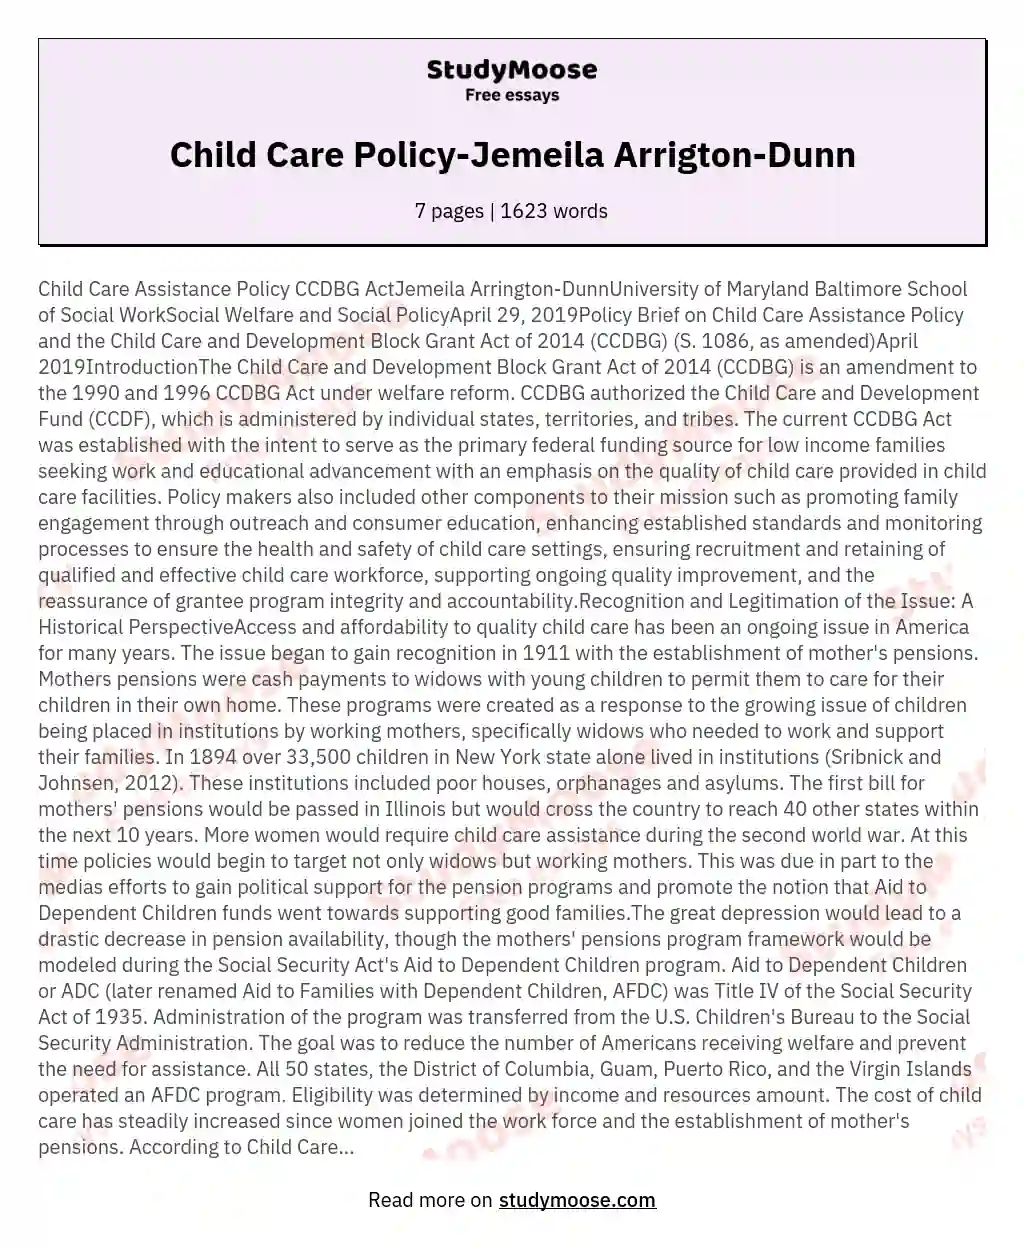 Child Care Policy-Jemeila Arrigton-Dunn essay